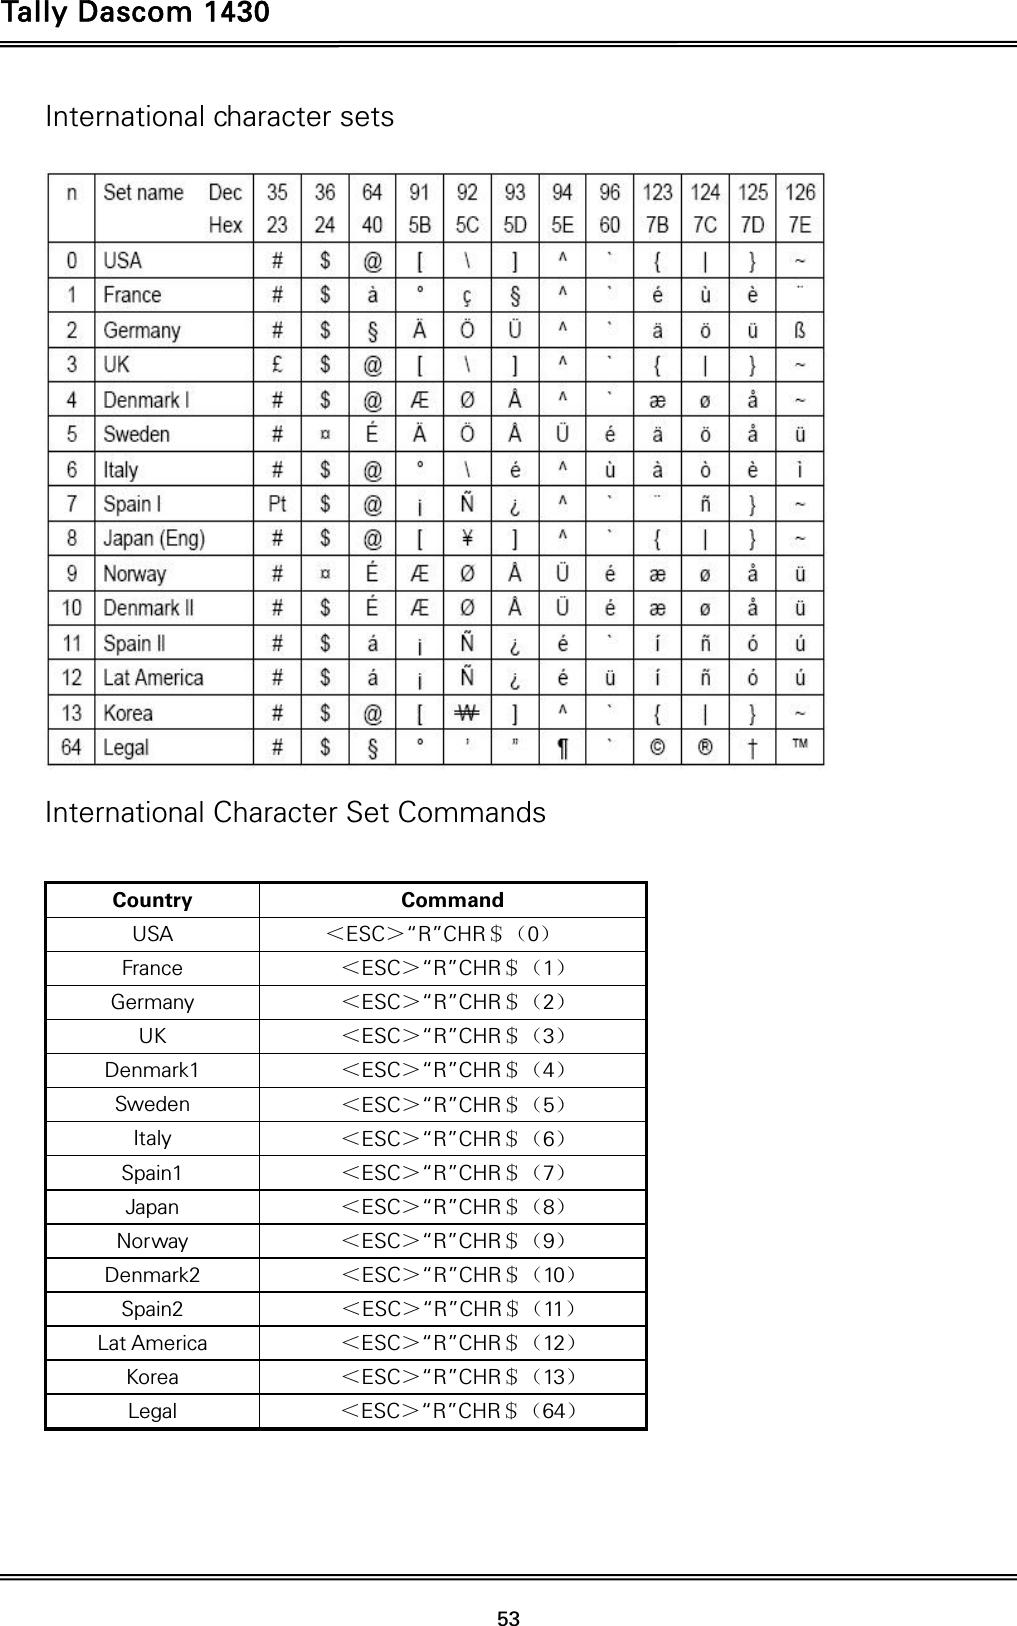 Tally Dascom 1430   53  International character sets     International Character Set Commands  Country Command USA  ＜ESC＞“R”CHR＄（0） France   ＜ESC＞“R”CHR＄（1） Germany   ＜ESC＞“R”CHR＄（2） UK   ＜ESC＞“R”CHR＄（3） Denmark1   ＜ESC＞“R”CHR＄（4） Sweden   ＜ESC＞“R”CHR＄（5） Italy   ＜ESC＞“R”CHR＄（6） Spain1   ＜ESC＞“R”CHR＄（7） Japan   ＜ESC＞“R”CHR＄（8） Norway   ＜ESC＞“R”CHR＄（9） Denmark2    ＜ESC＞“R”CHR＄（10） Spain2    ＜ESC＞“R”CHR＄（11） Lat America    ＜ESC＞“R”CHR＄（12） Korea    ＜ESC＞“R”CHR＄（13） Legal    ＜ESC＞“R”CHR＄（64）    